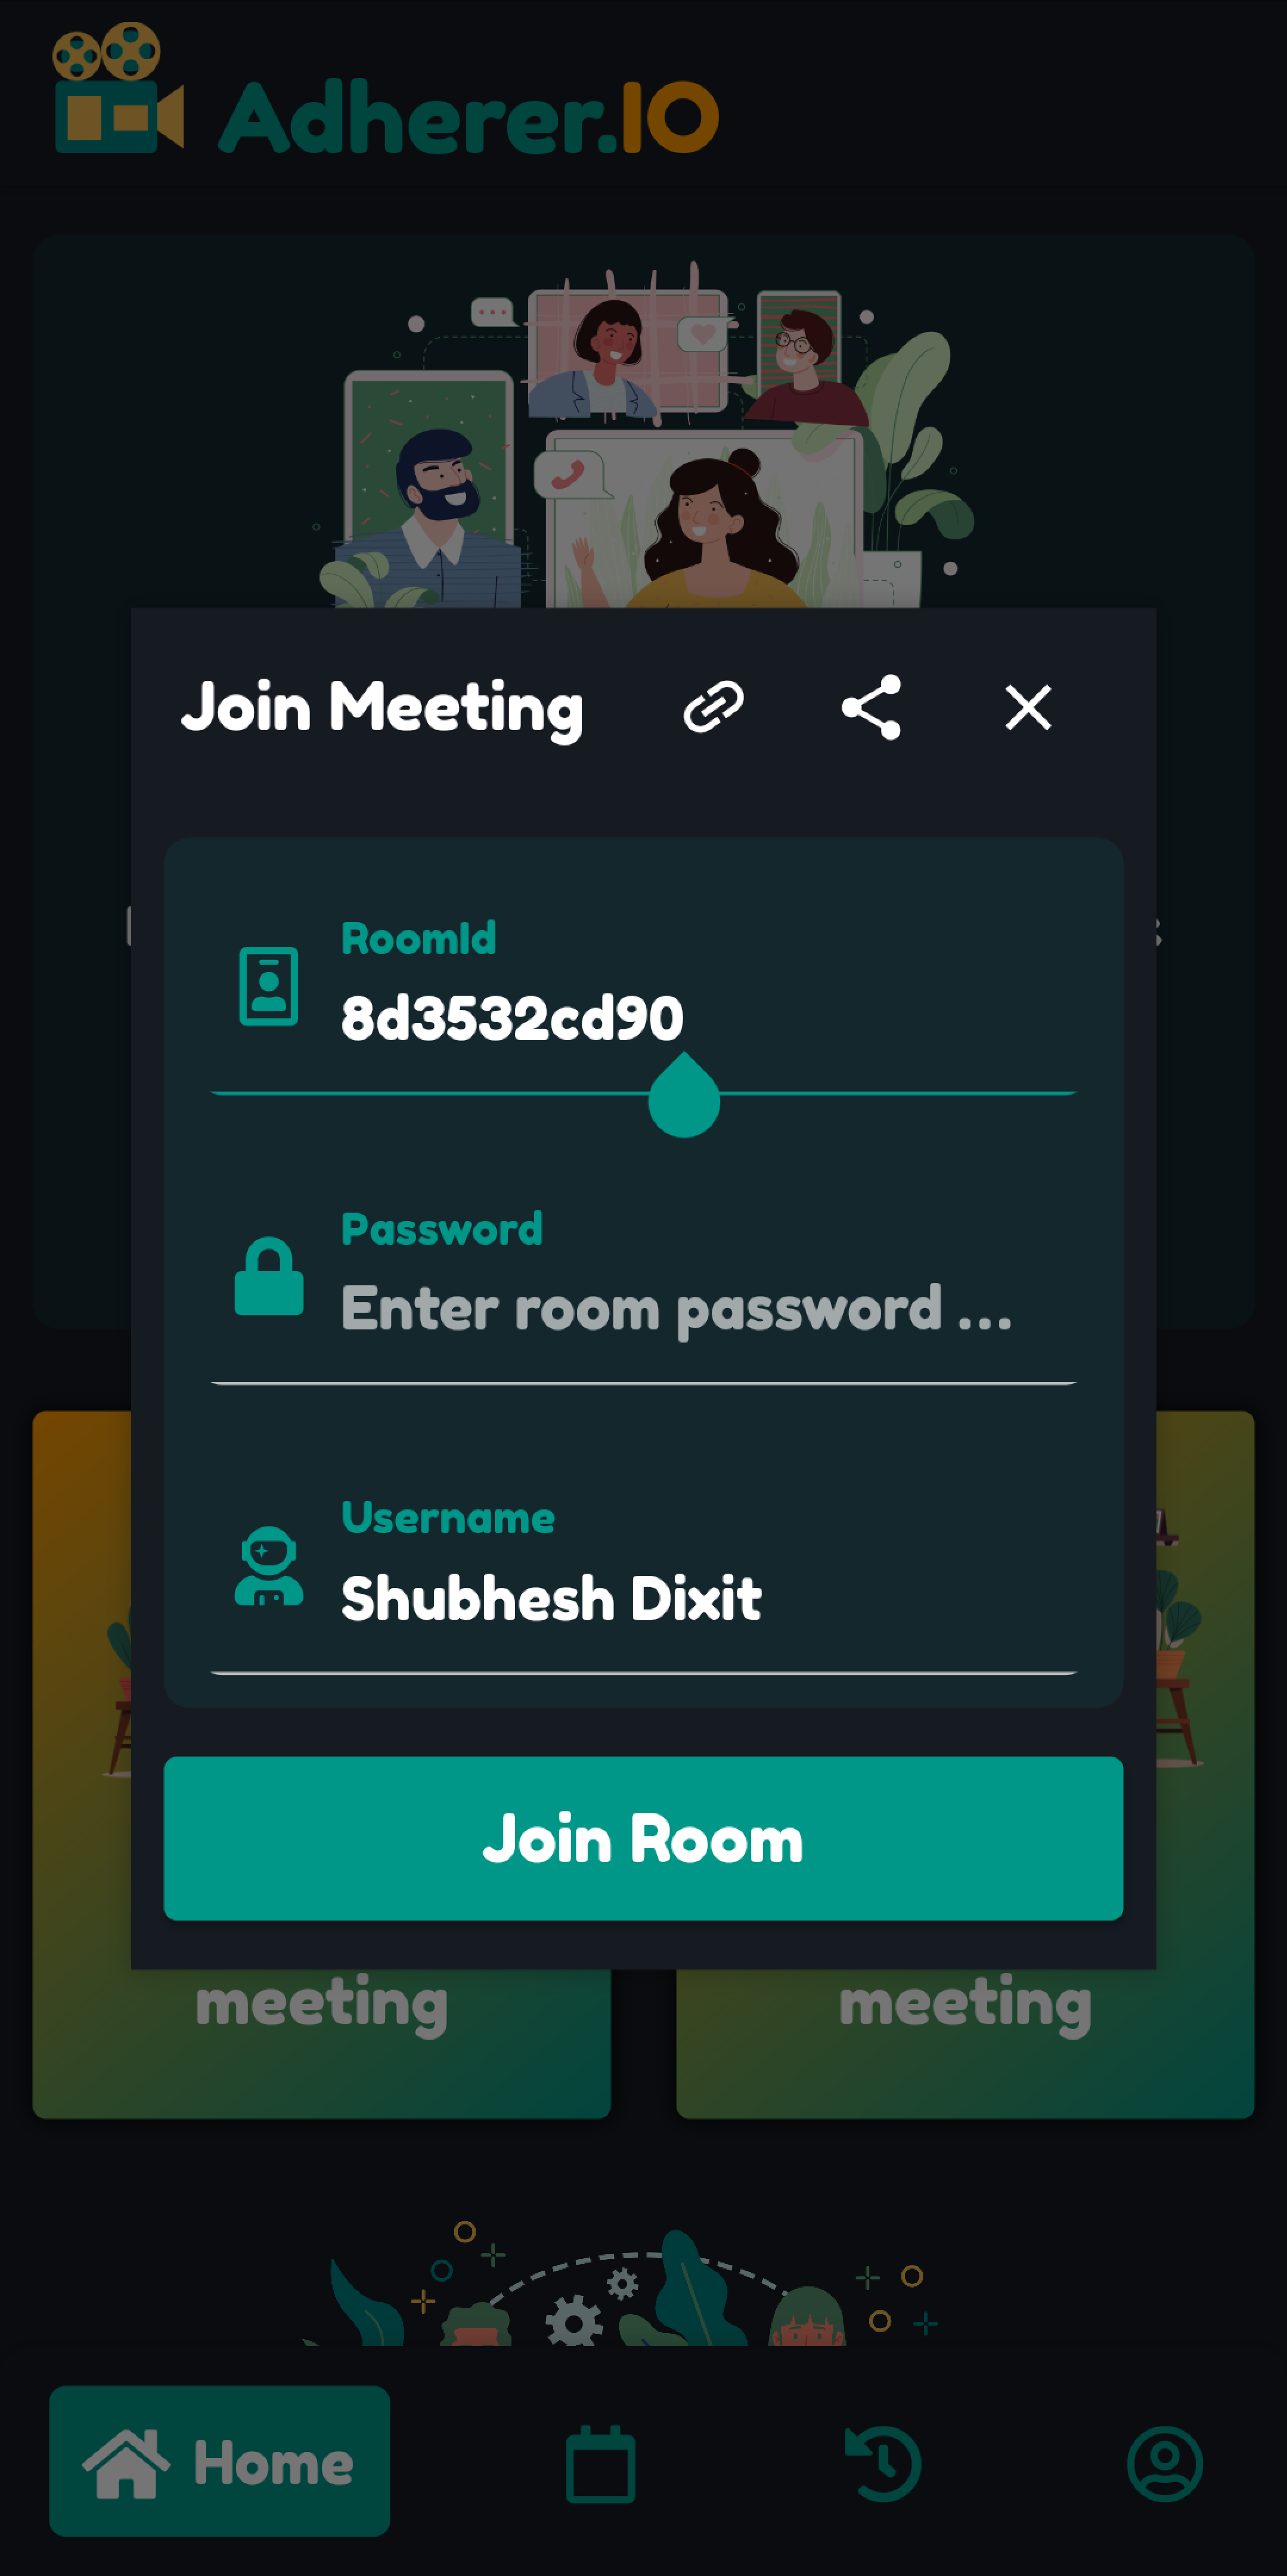 Image of adherer's meeting page